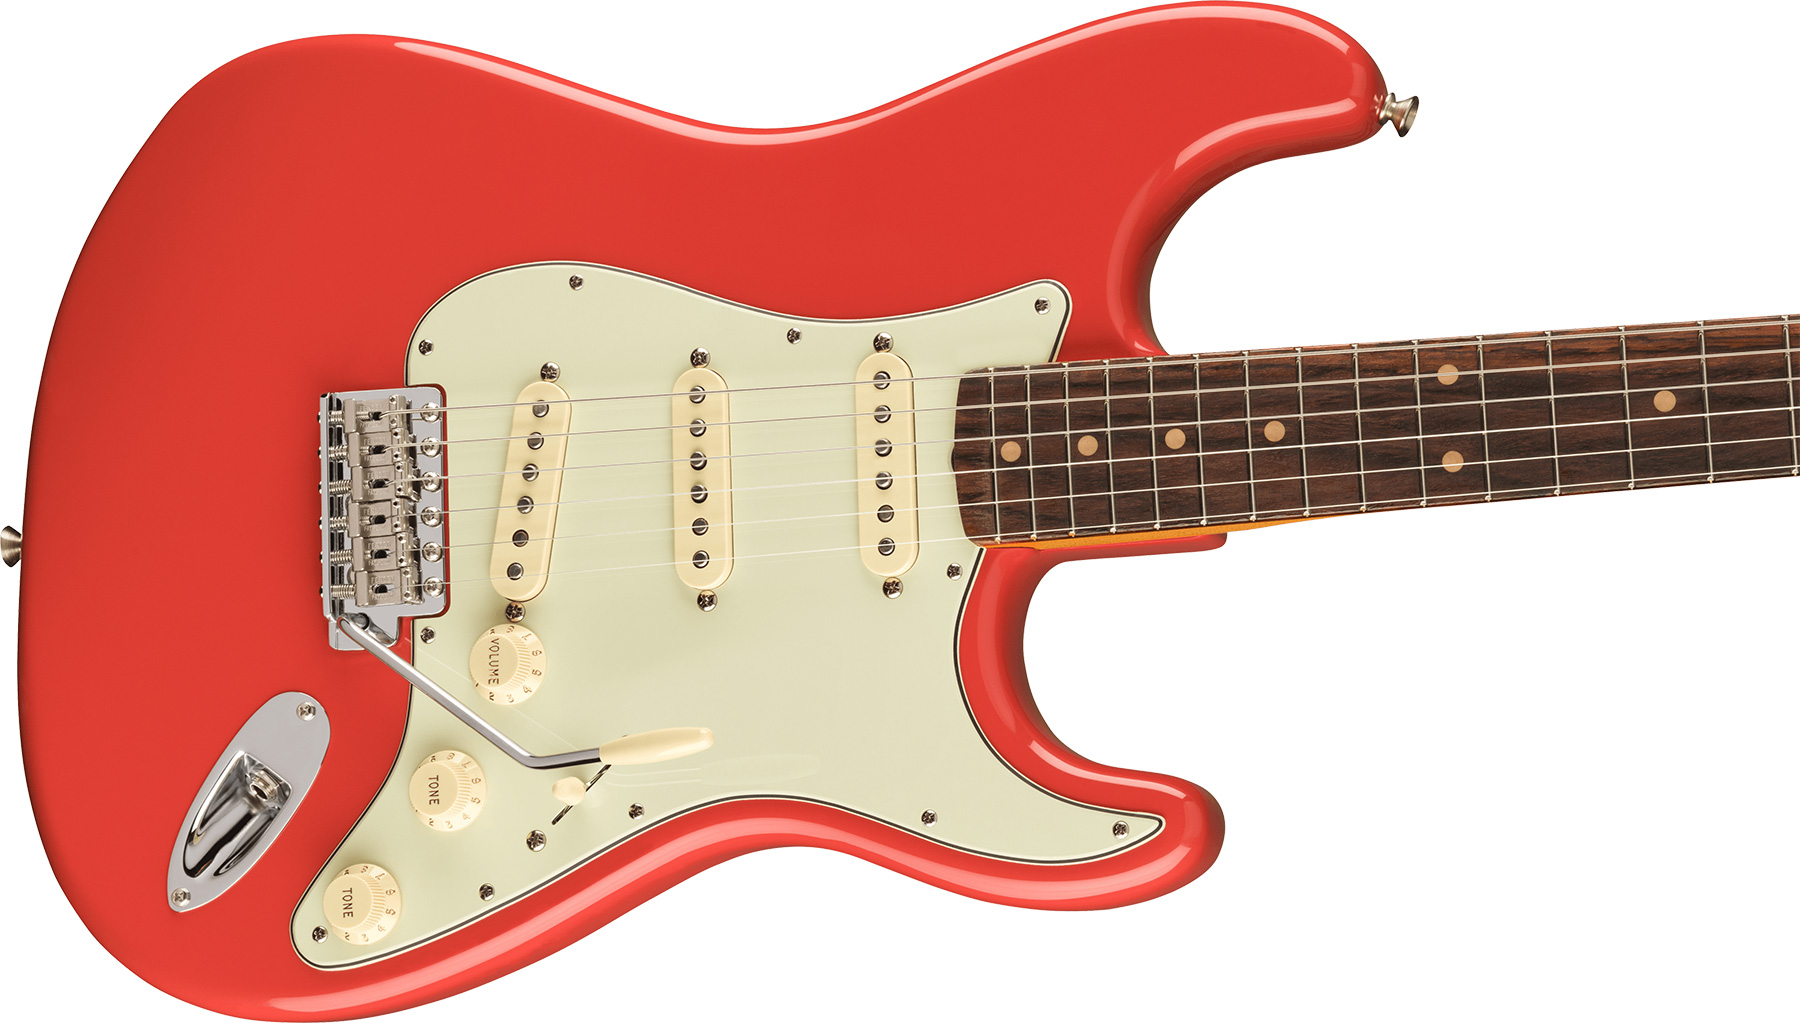 Fender Strat 1961 American Vintage Ii Usa 3s Trem Rw - Fiesta Red - Str shape electric guitar - Variation 2